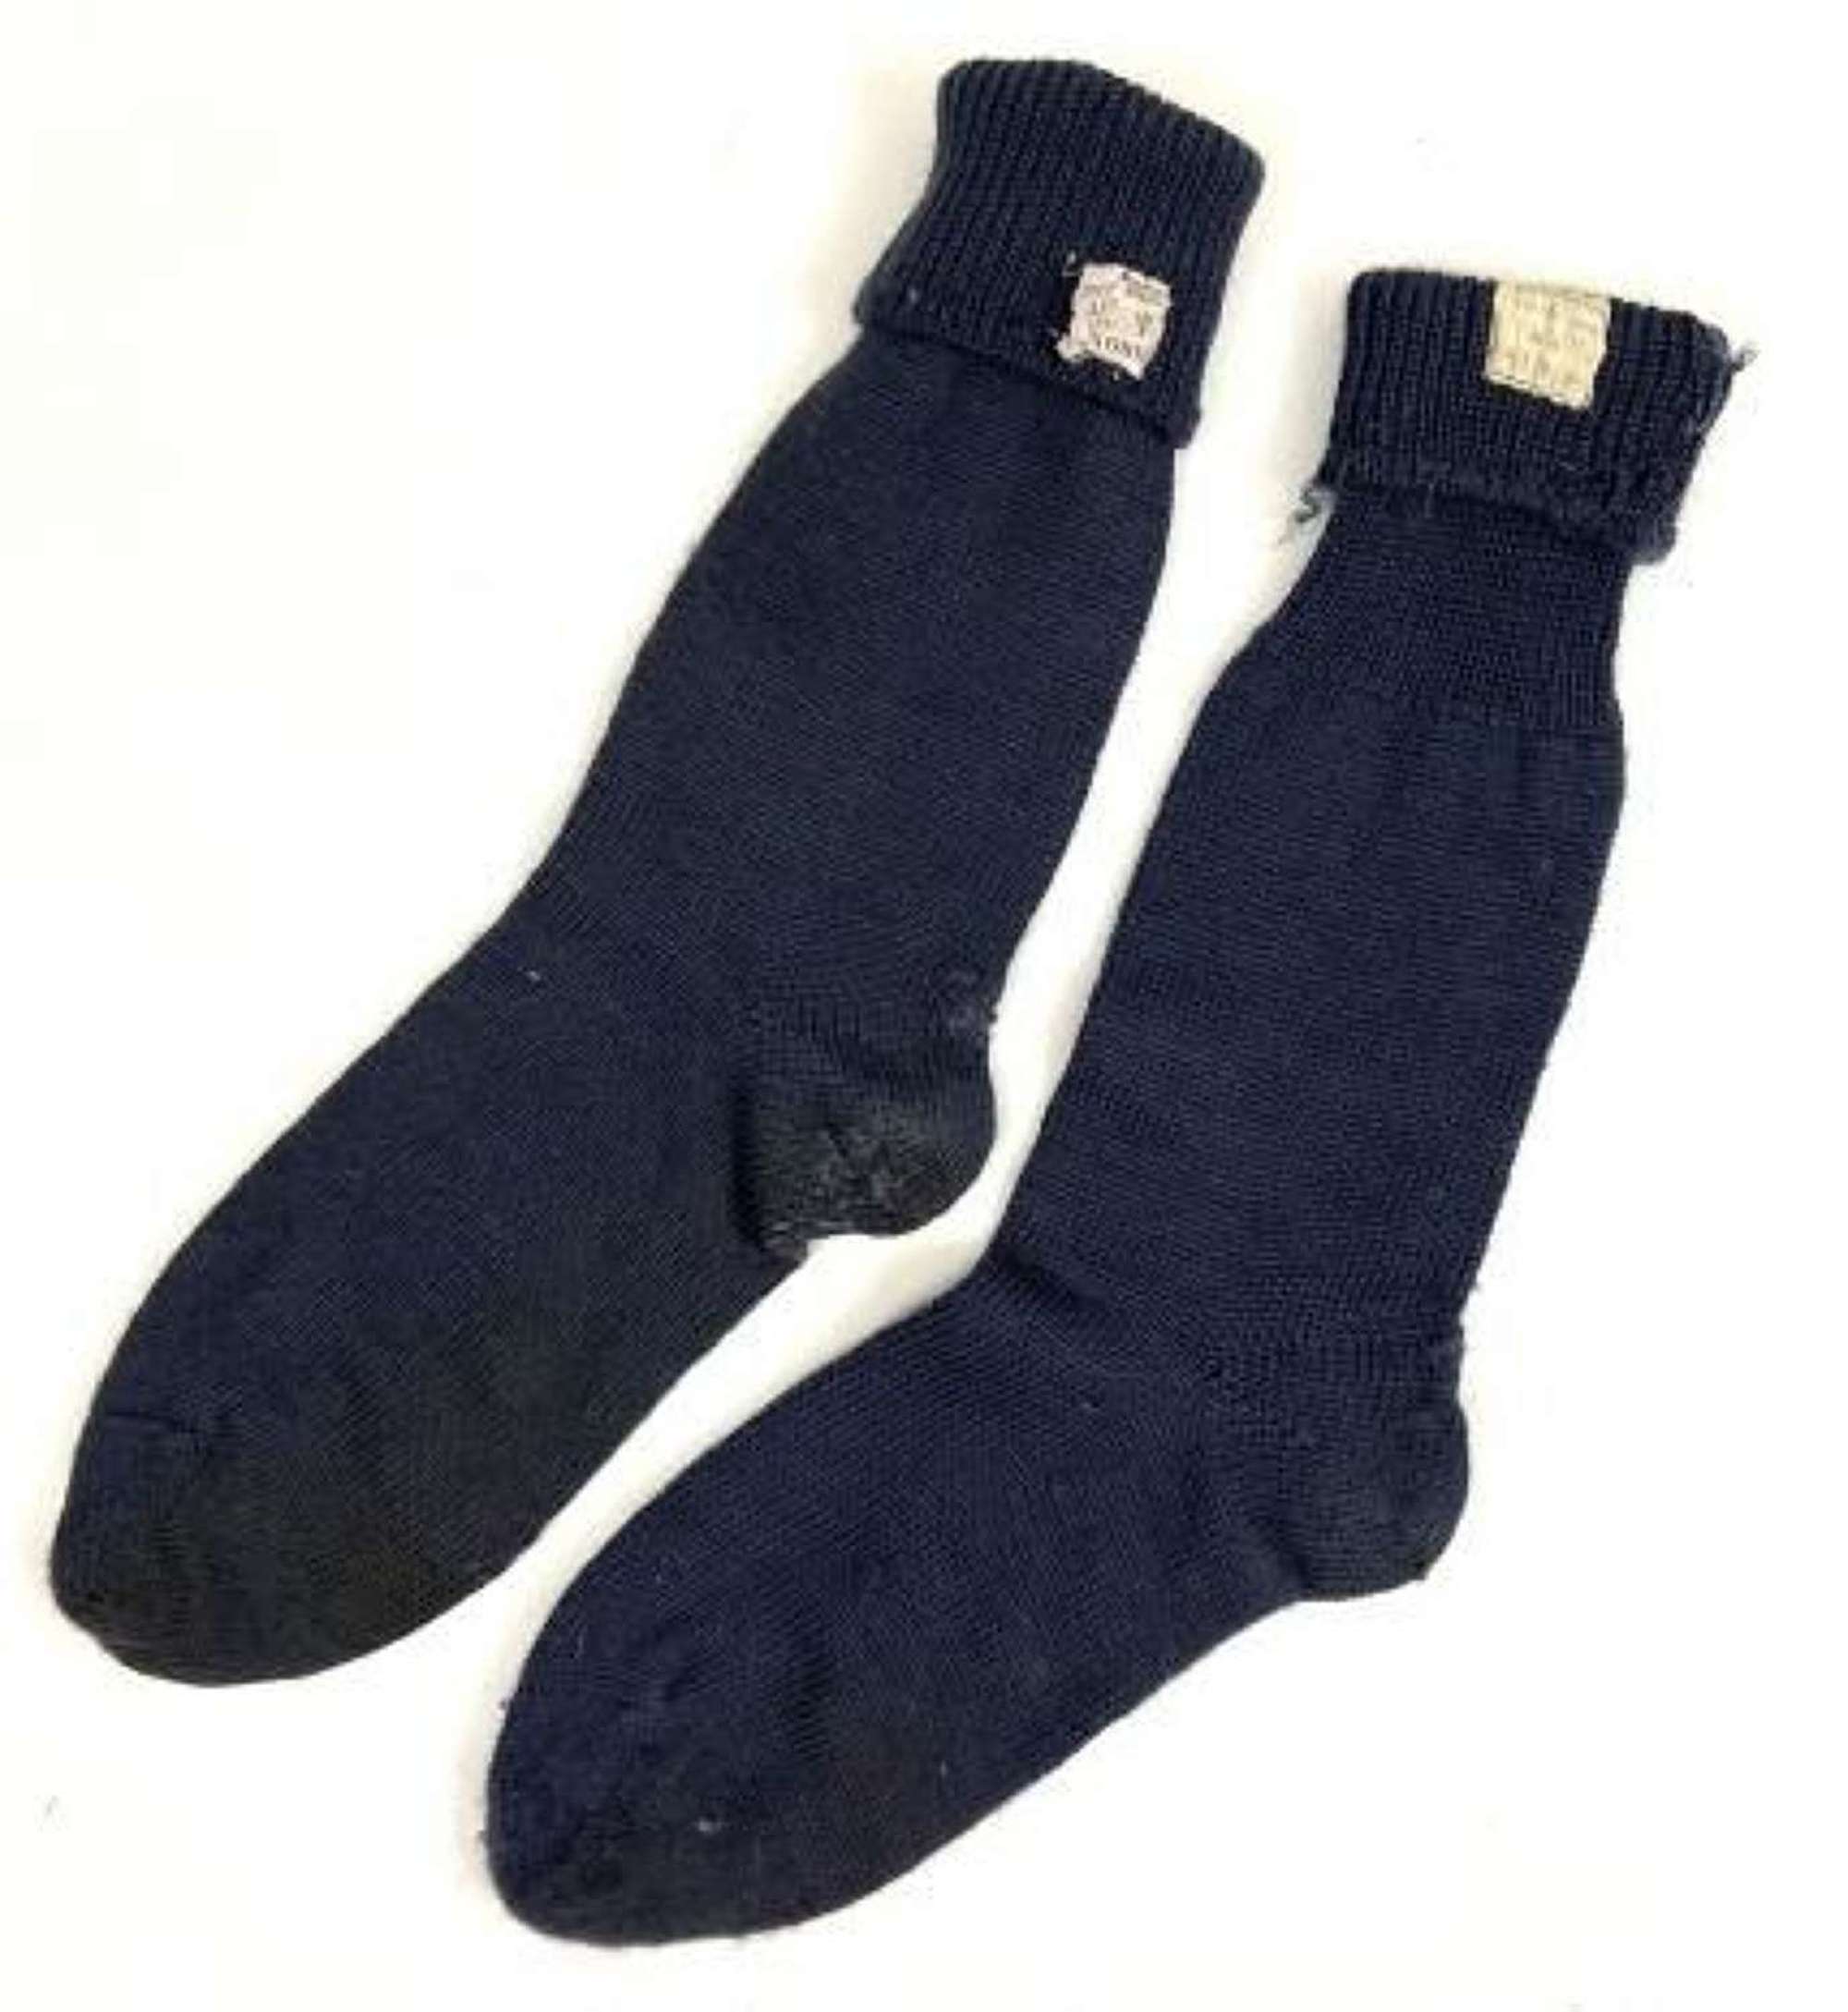 Original 1955 Dated RAF Ordinary Airman’s Socks